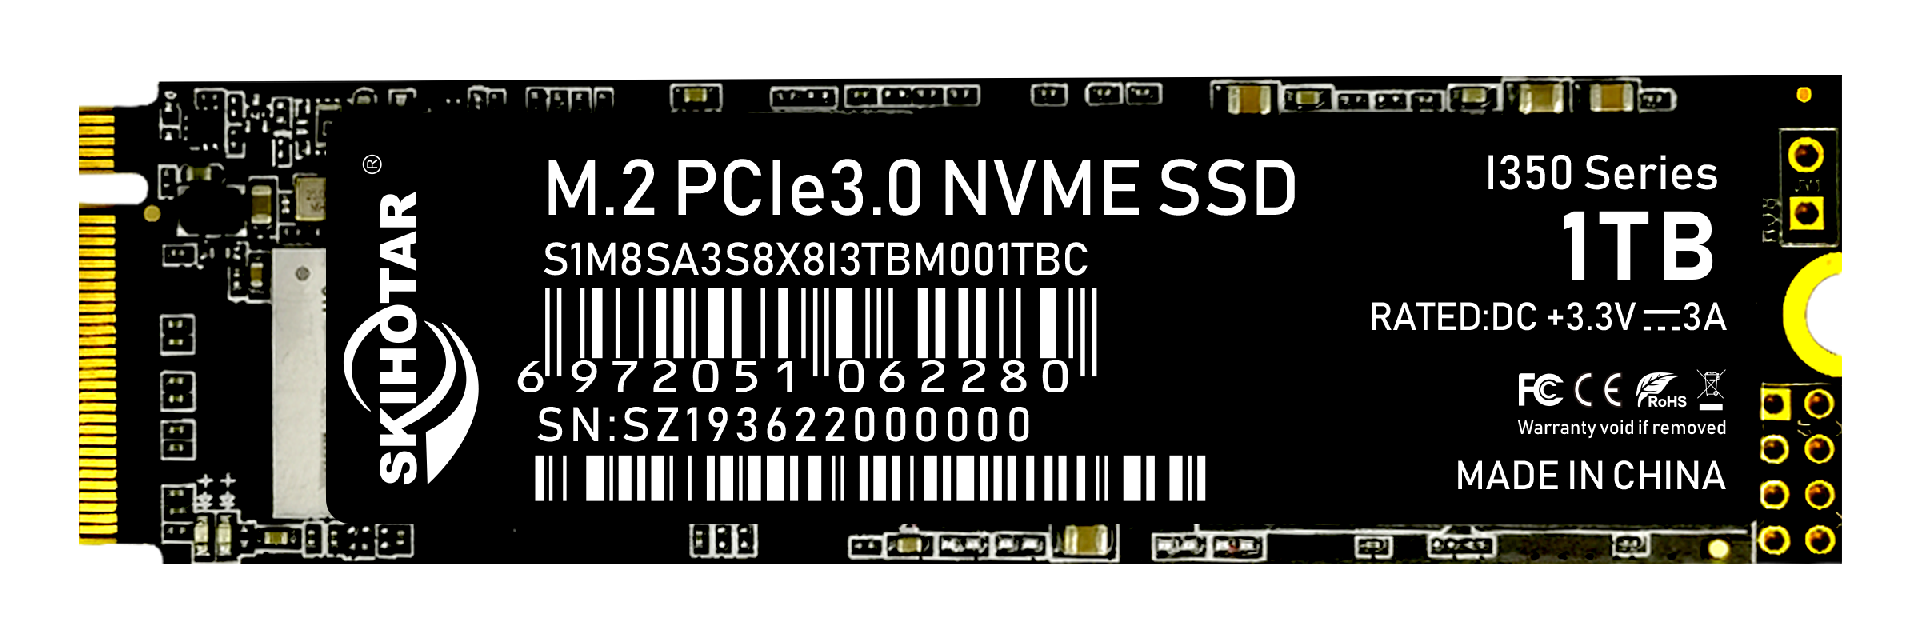 I350 PCIe 3.0 NVMe